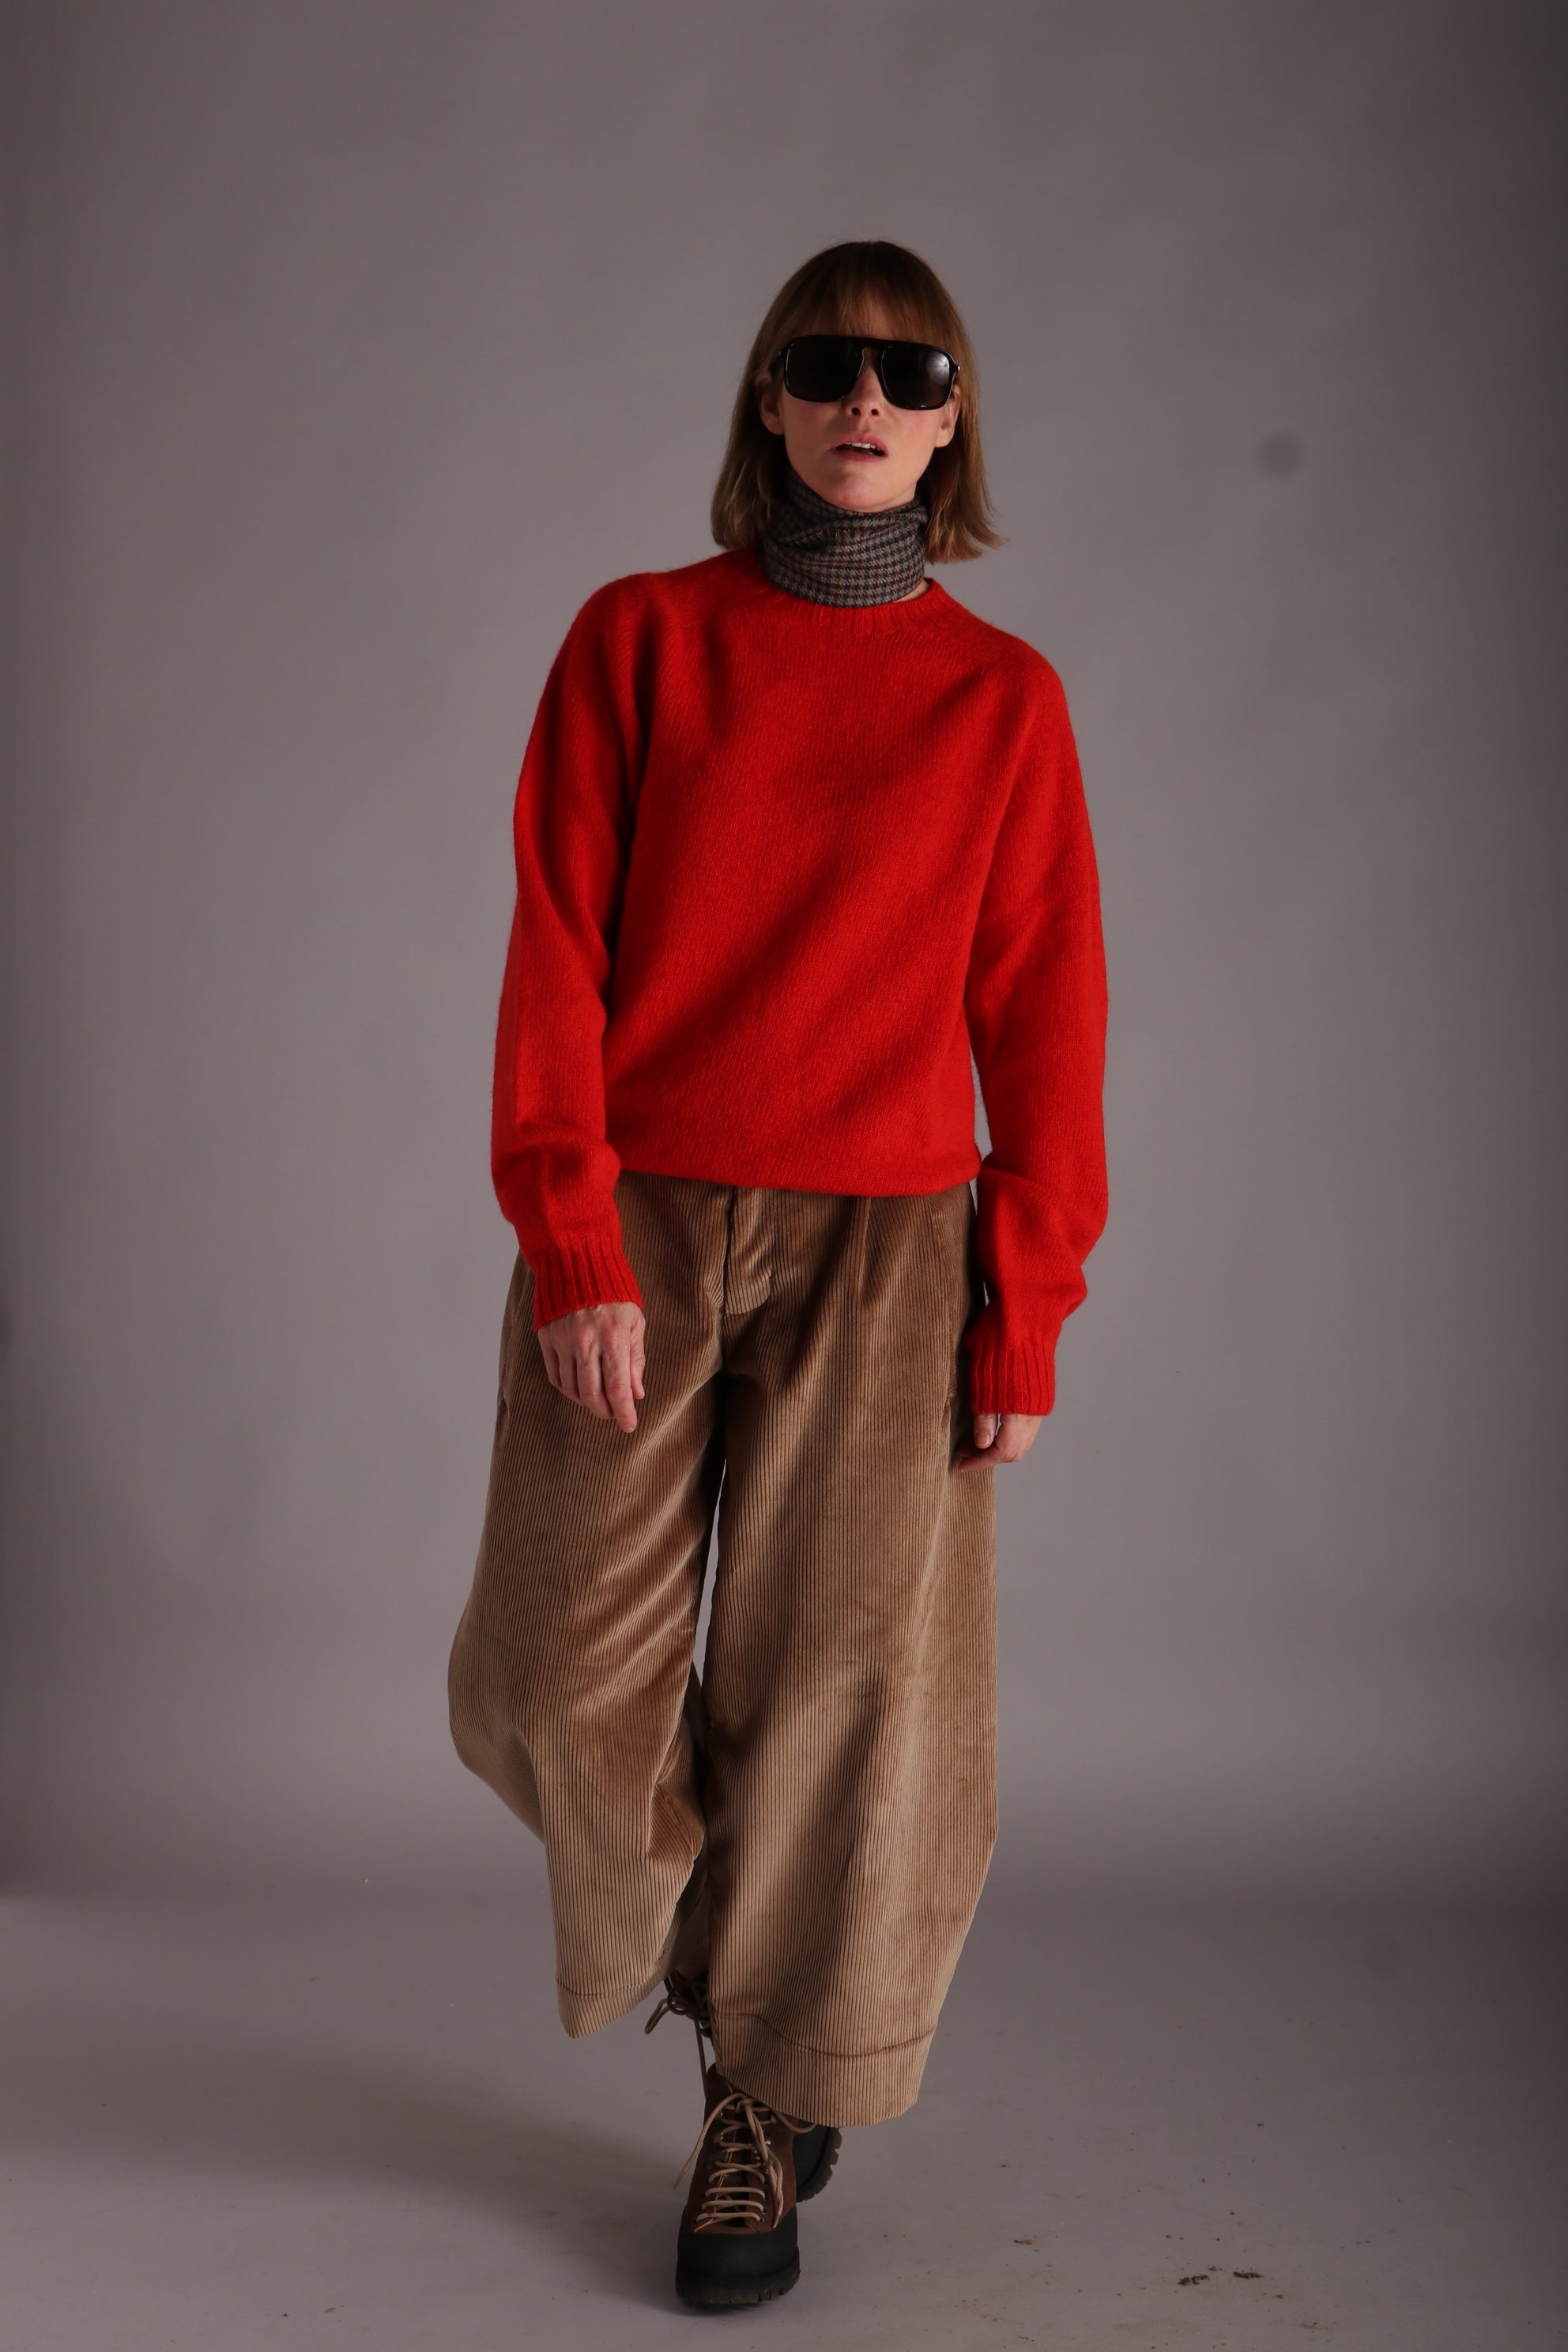 Sienna wears Carrier Company Shetland Lambswool Jersey in Scarlet with Dutch Trousers in Sand Corduroy